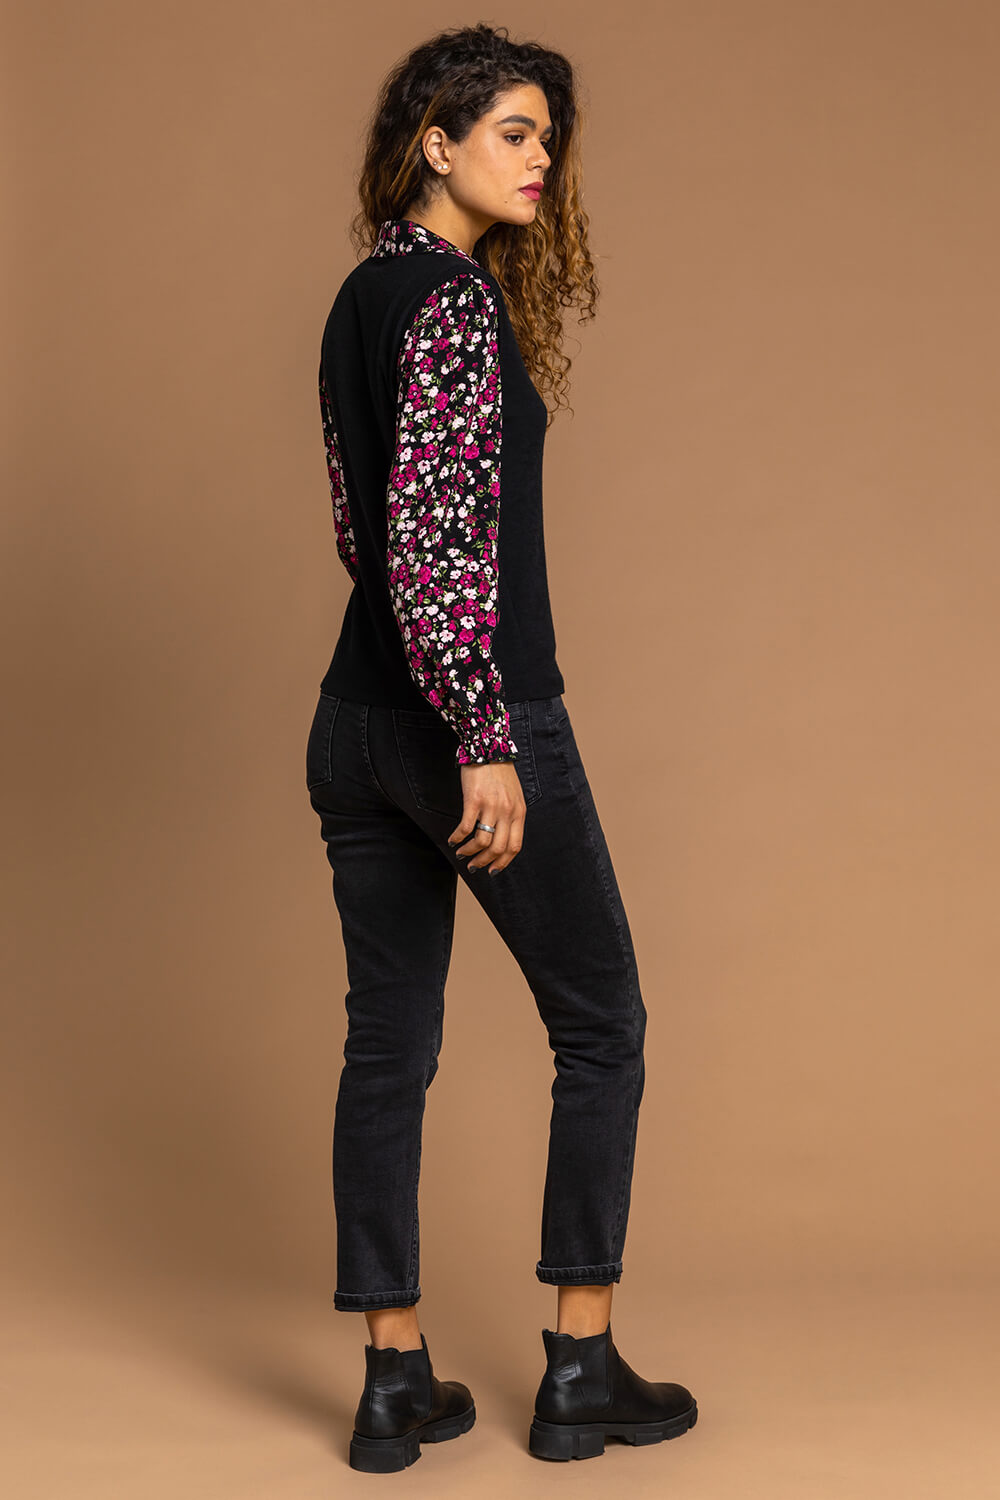 Black Floral Print Sweater Vest Long Sleeve Top, Image 2 of 5